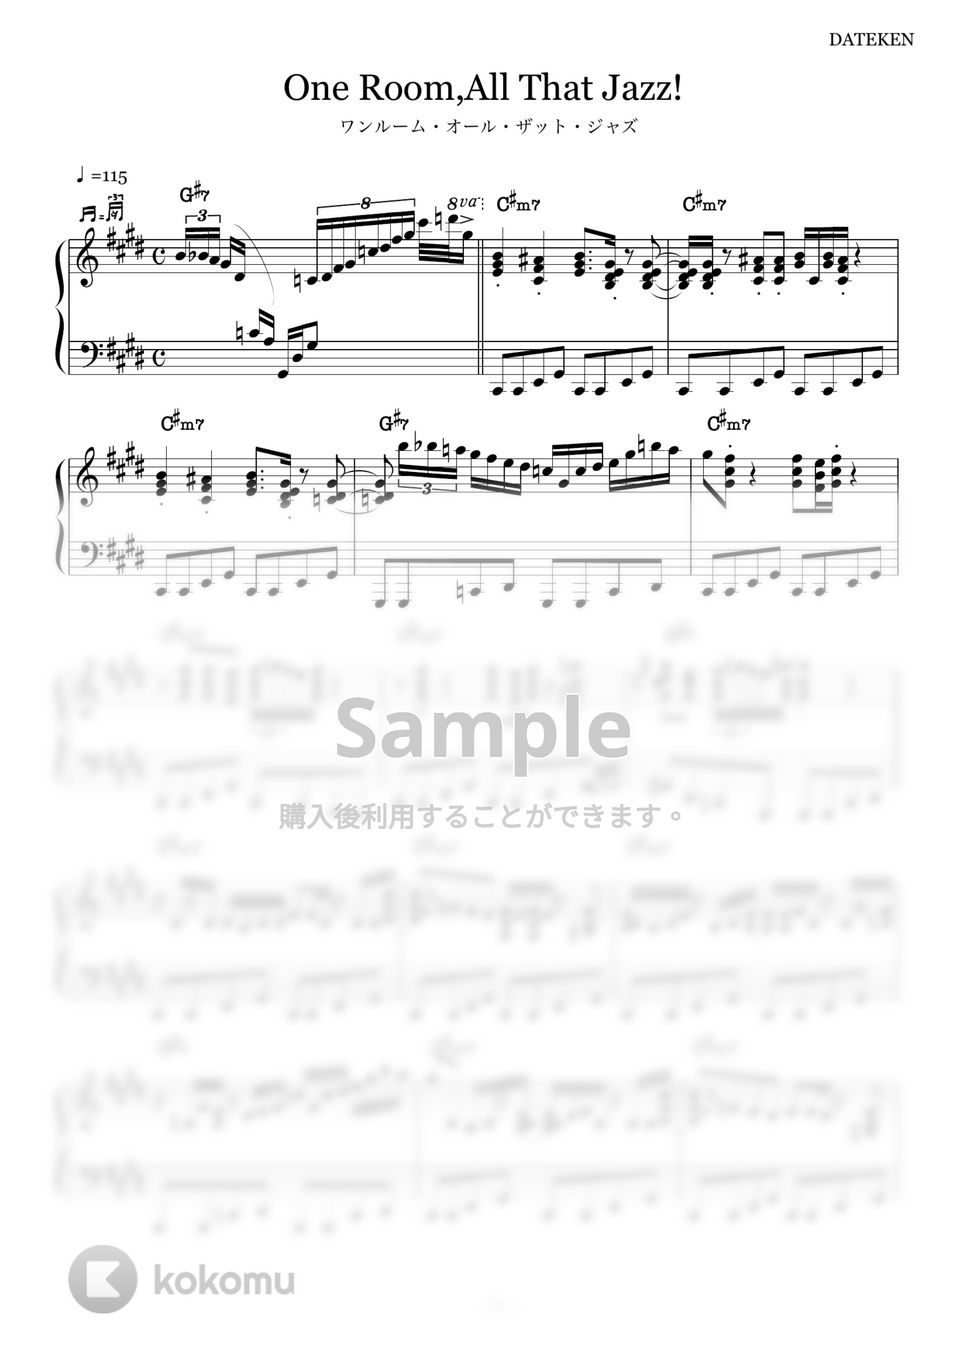 DATEKEN - ワンルーム・オール・ザット・ジャズ(One Room,All That Jazz!) (ピアノソロ/コード有/ボカロ/初音ミク)  by CAFUNE-かふね-